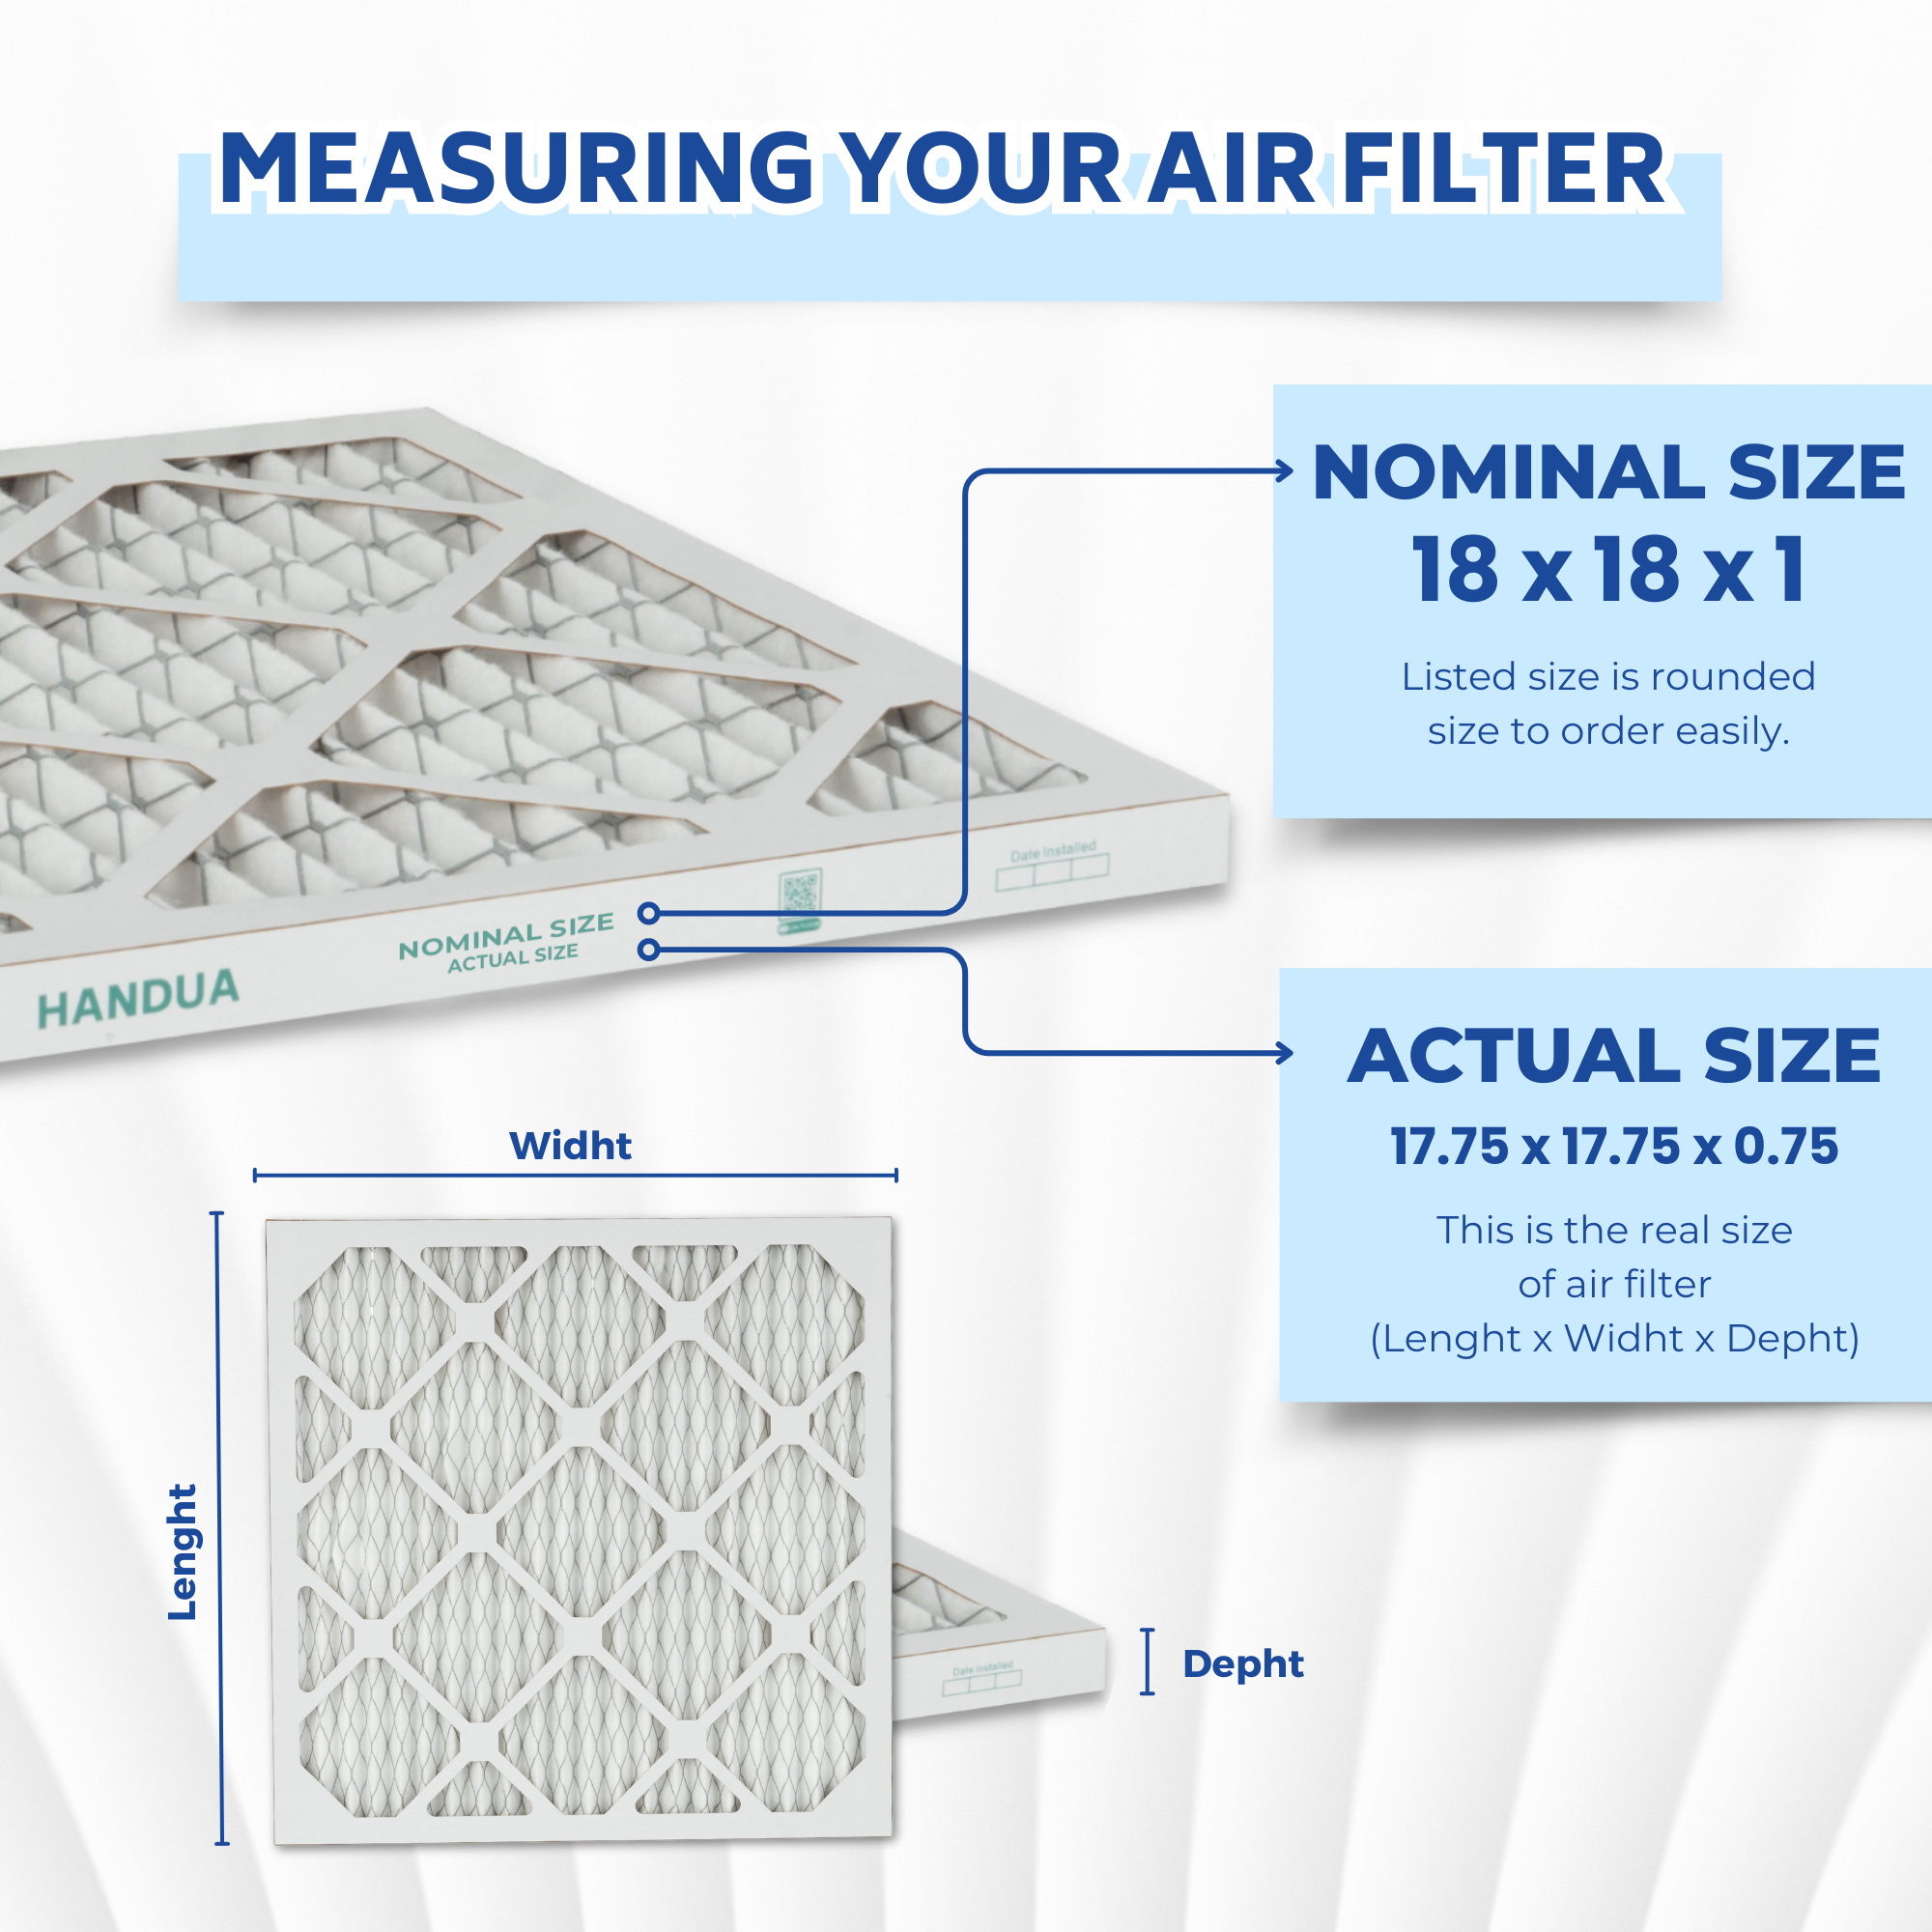 Handua 18x18x1 Air Filter MERV 13 Optimal Control, Plated Furnace AC Air Replacement Filter, 4 Pack (Actual Size: 17.75" x 17.75" x 0.75")